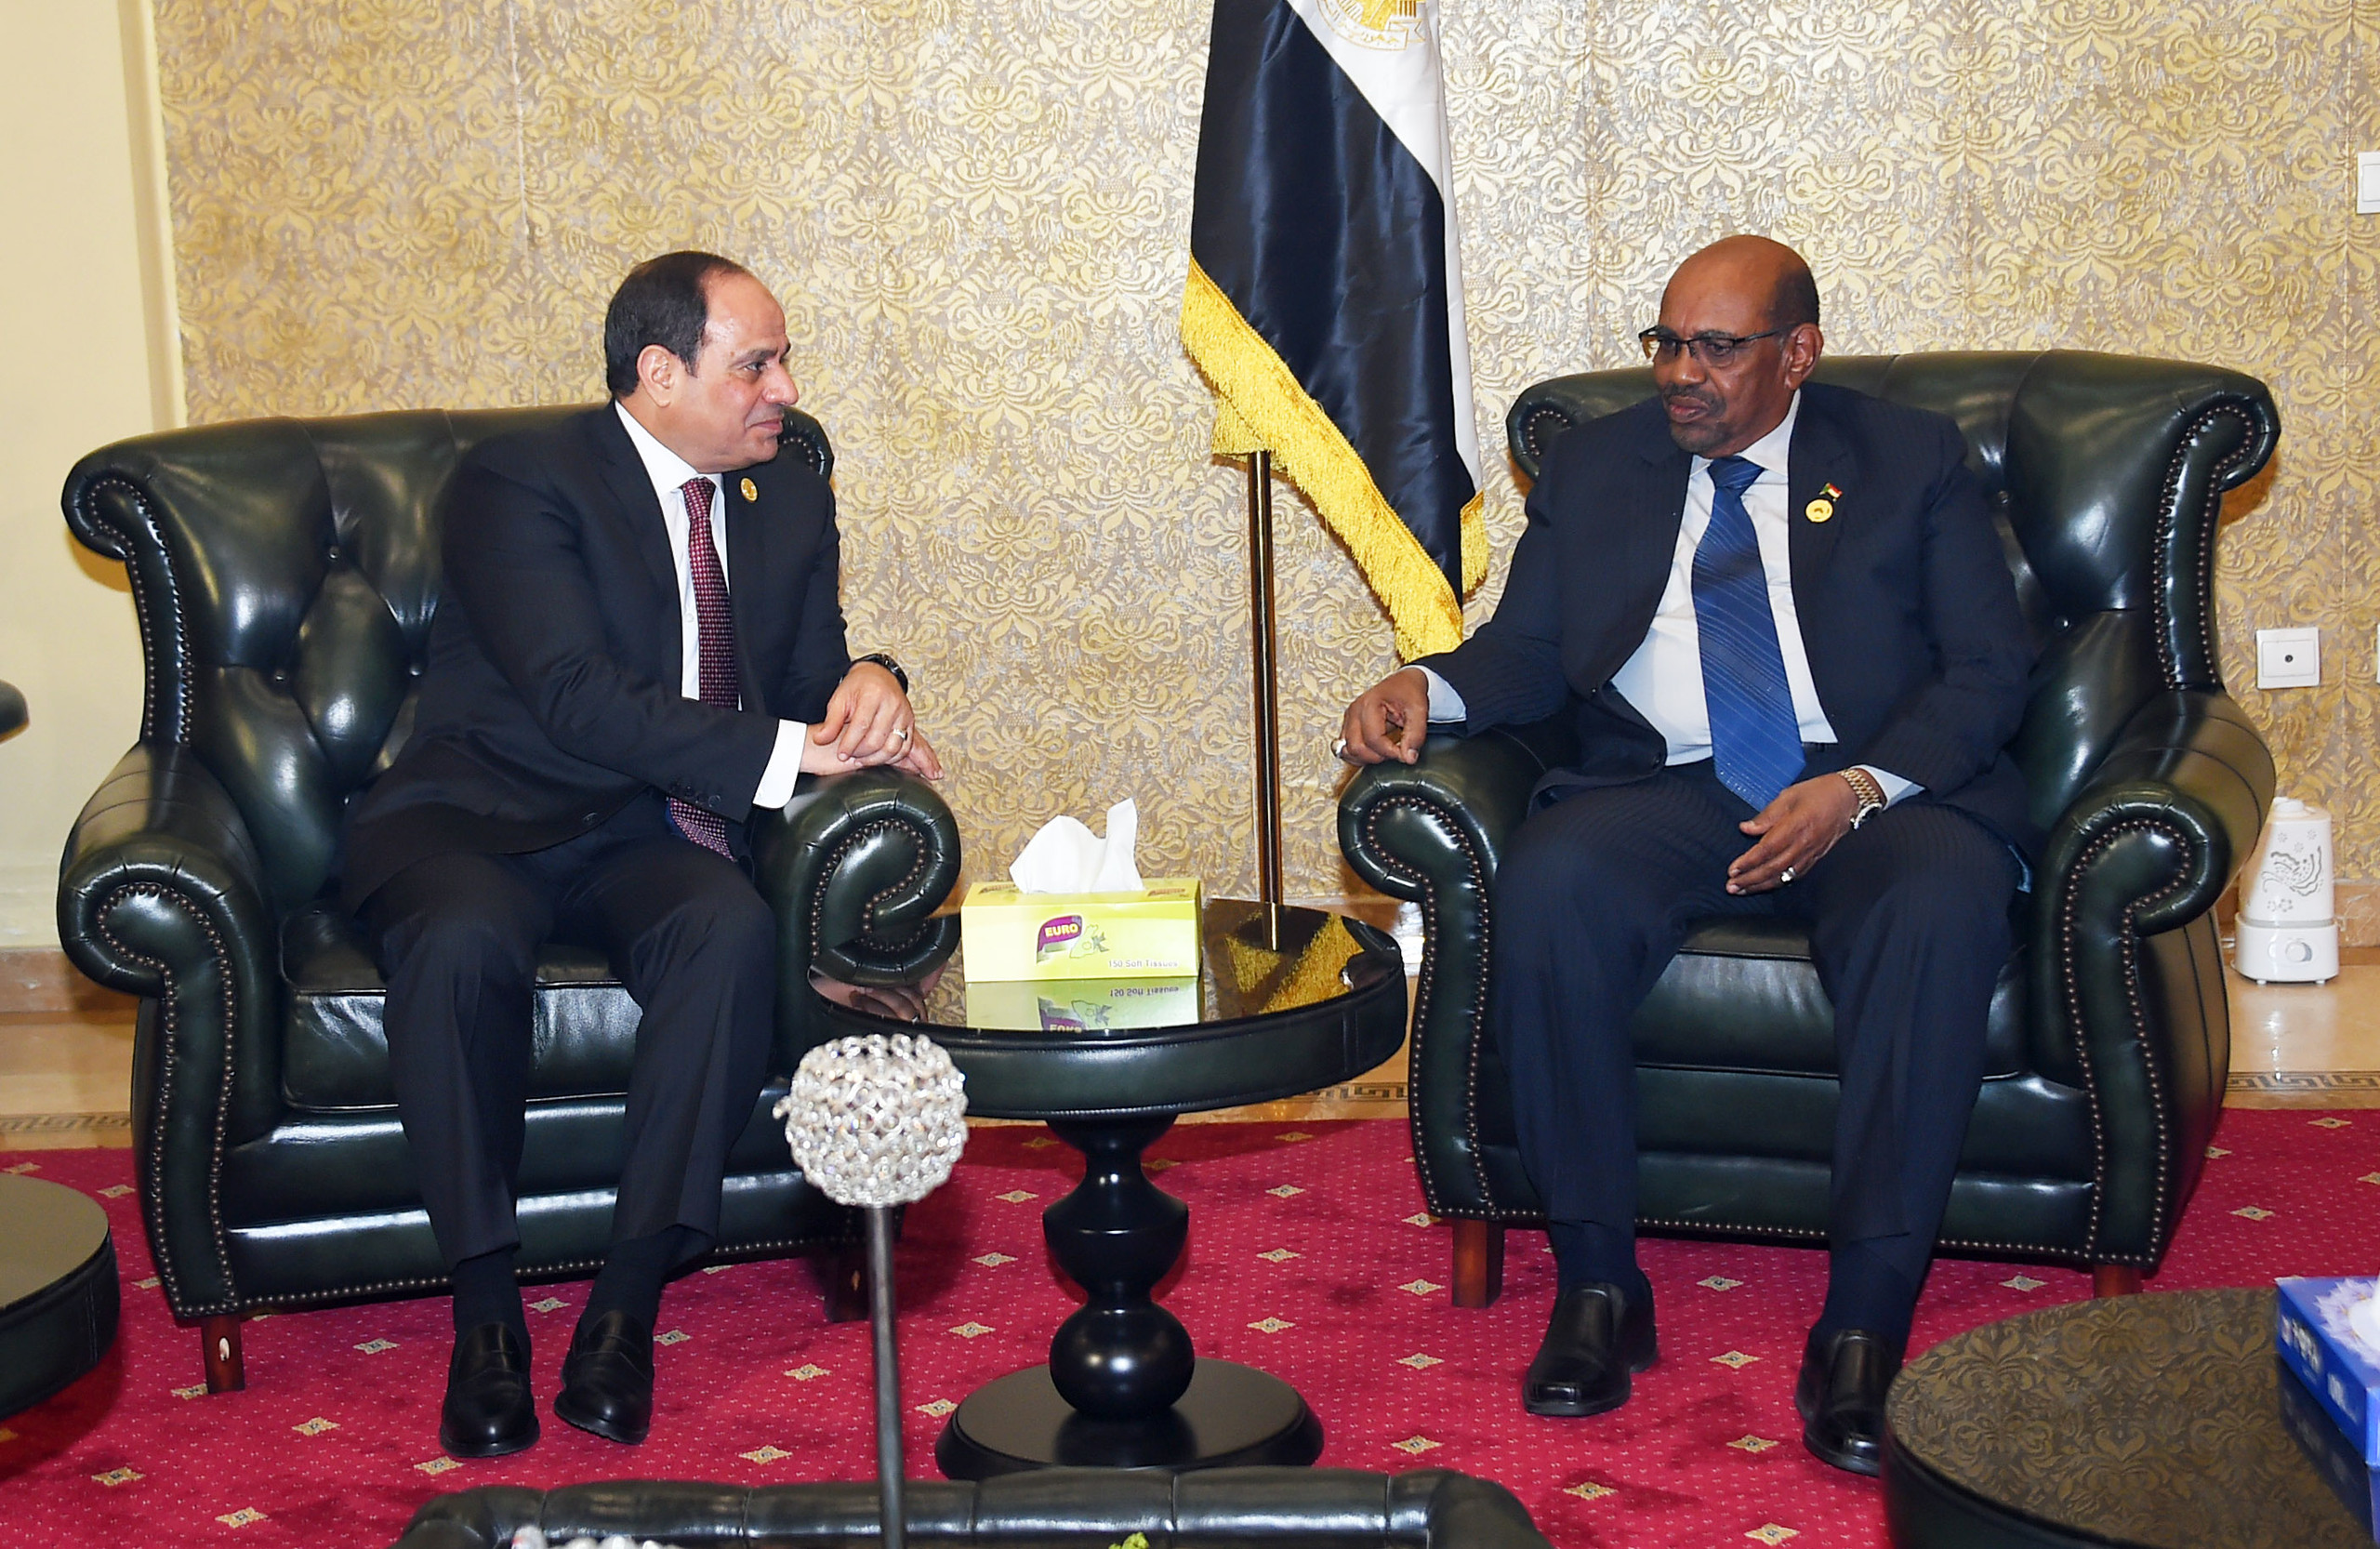 Sisi, Bashir meet in Addis Ababa